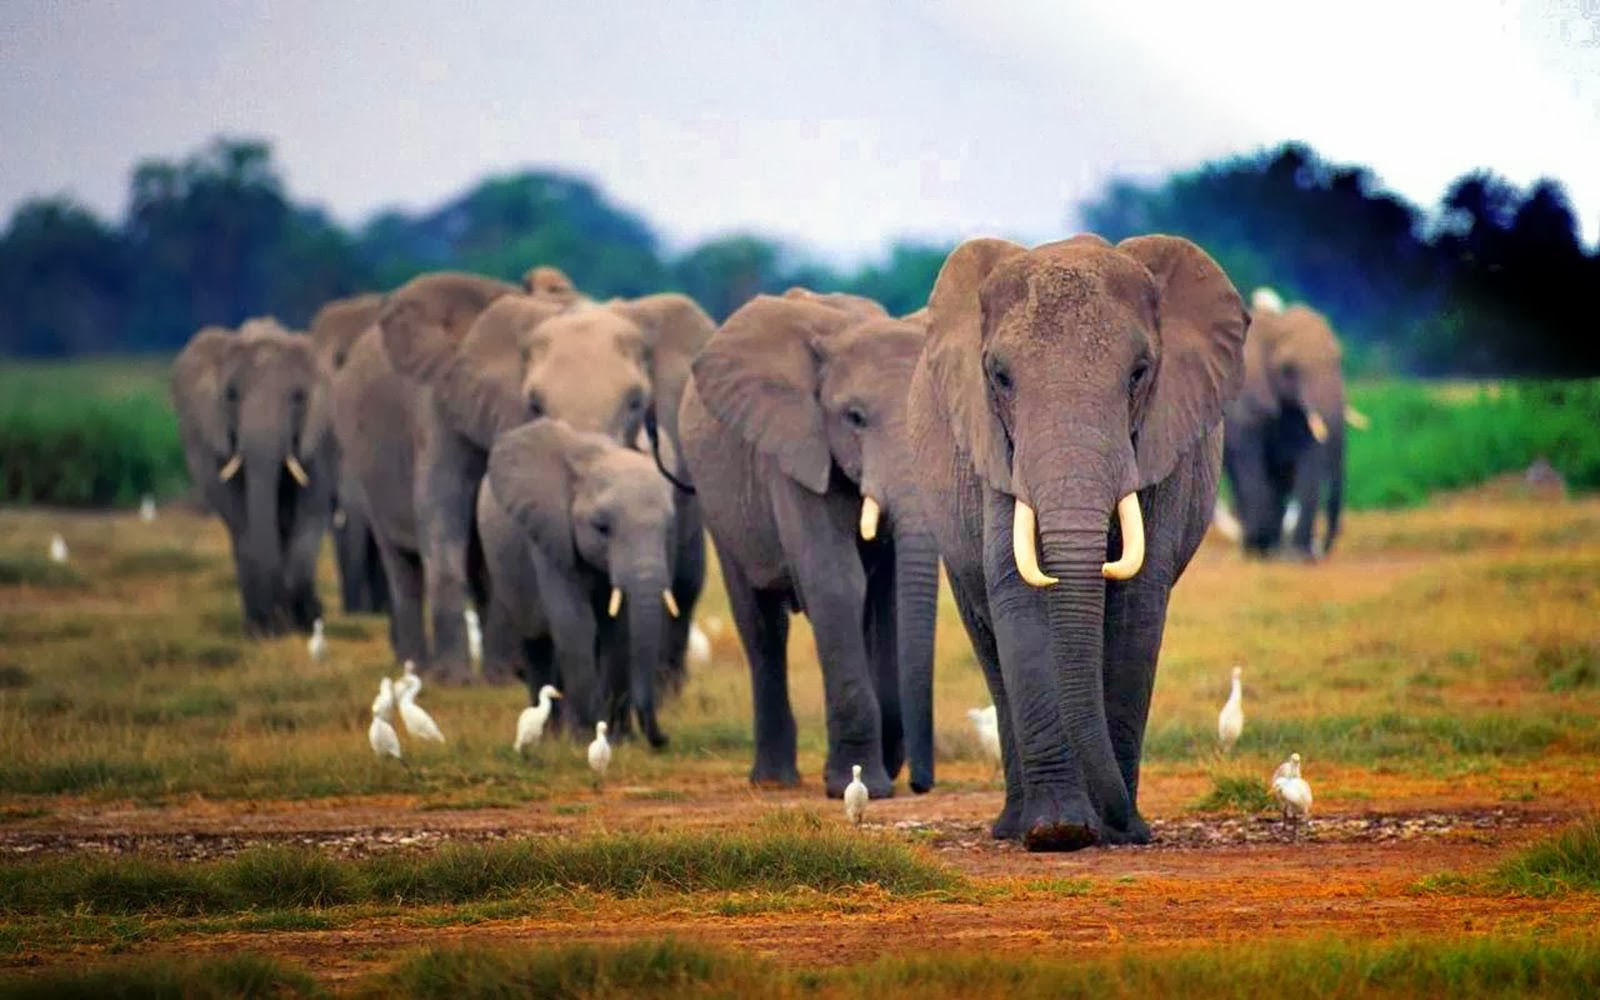 afrika wallpaper hd,elefant,elefanten und mammuts,landtier,tierwelt,indischer elefant